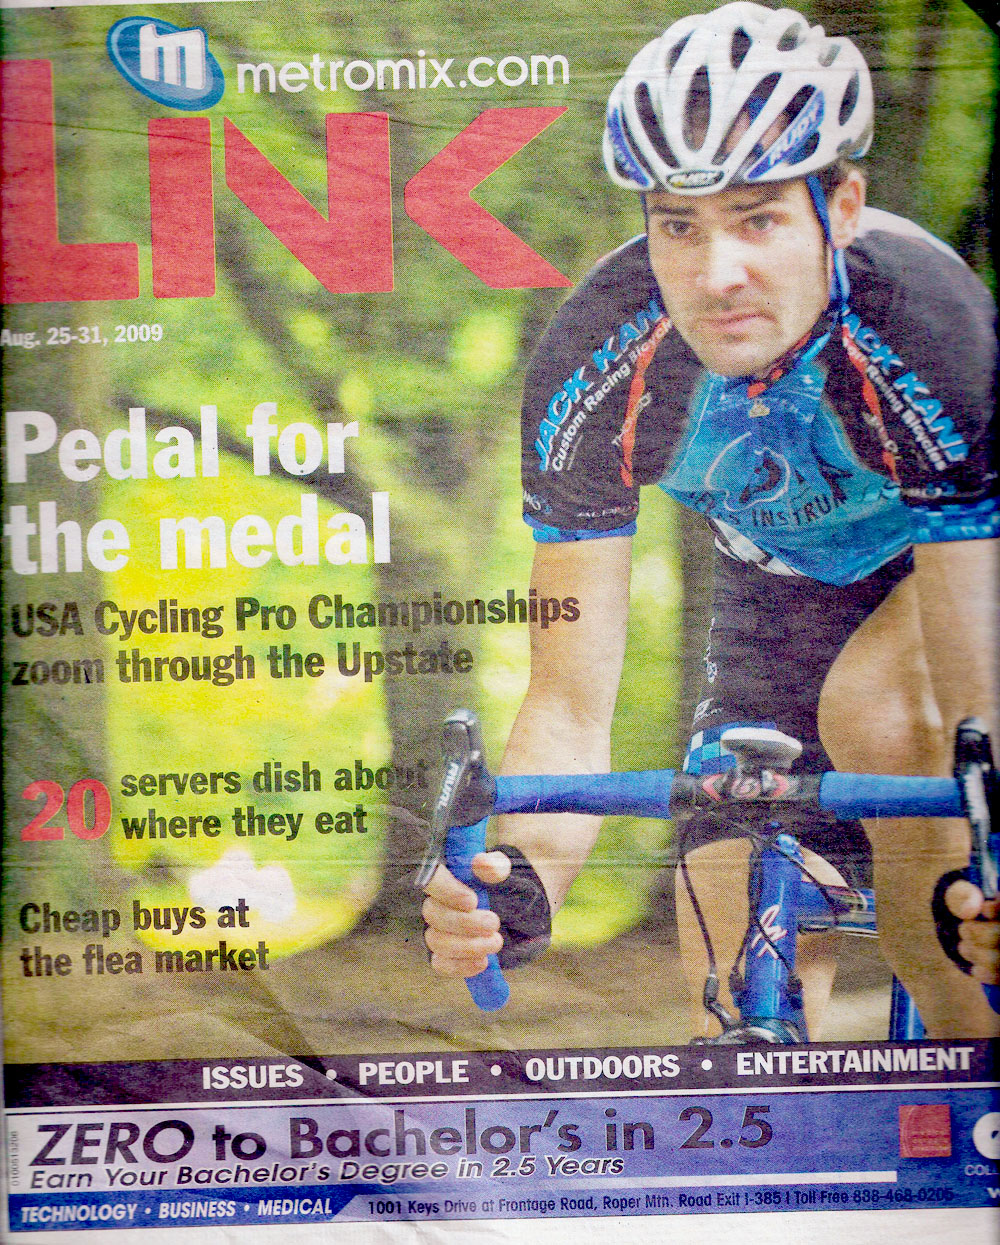 DLP / Texas Instruments Rider Boyd Johnson on the cover of a South Carolina Magazine.  Jack Kane bike